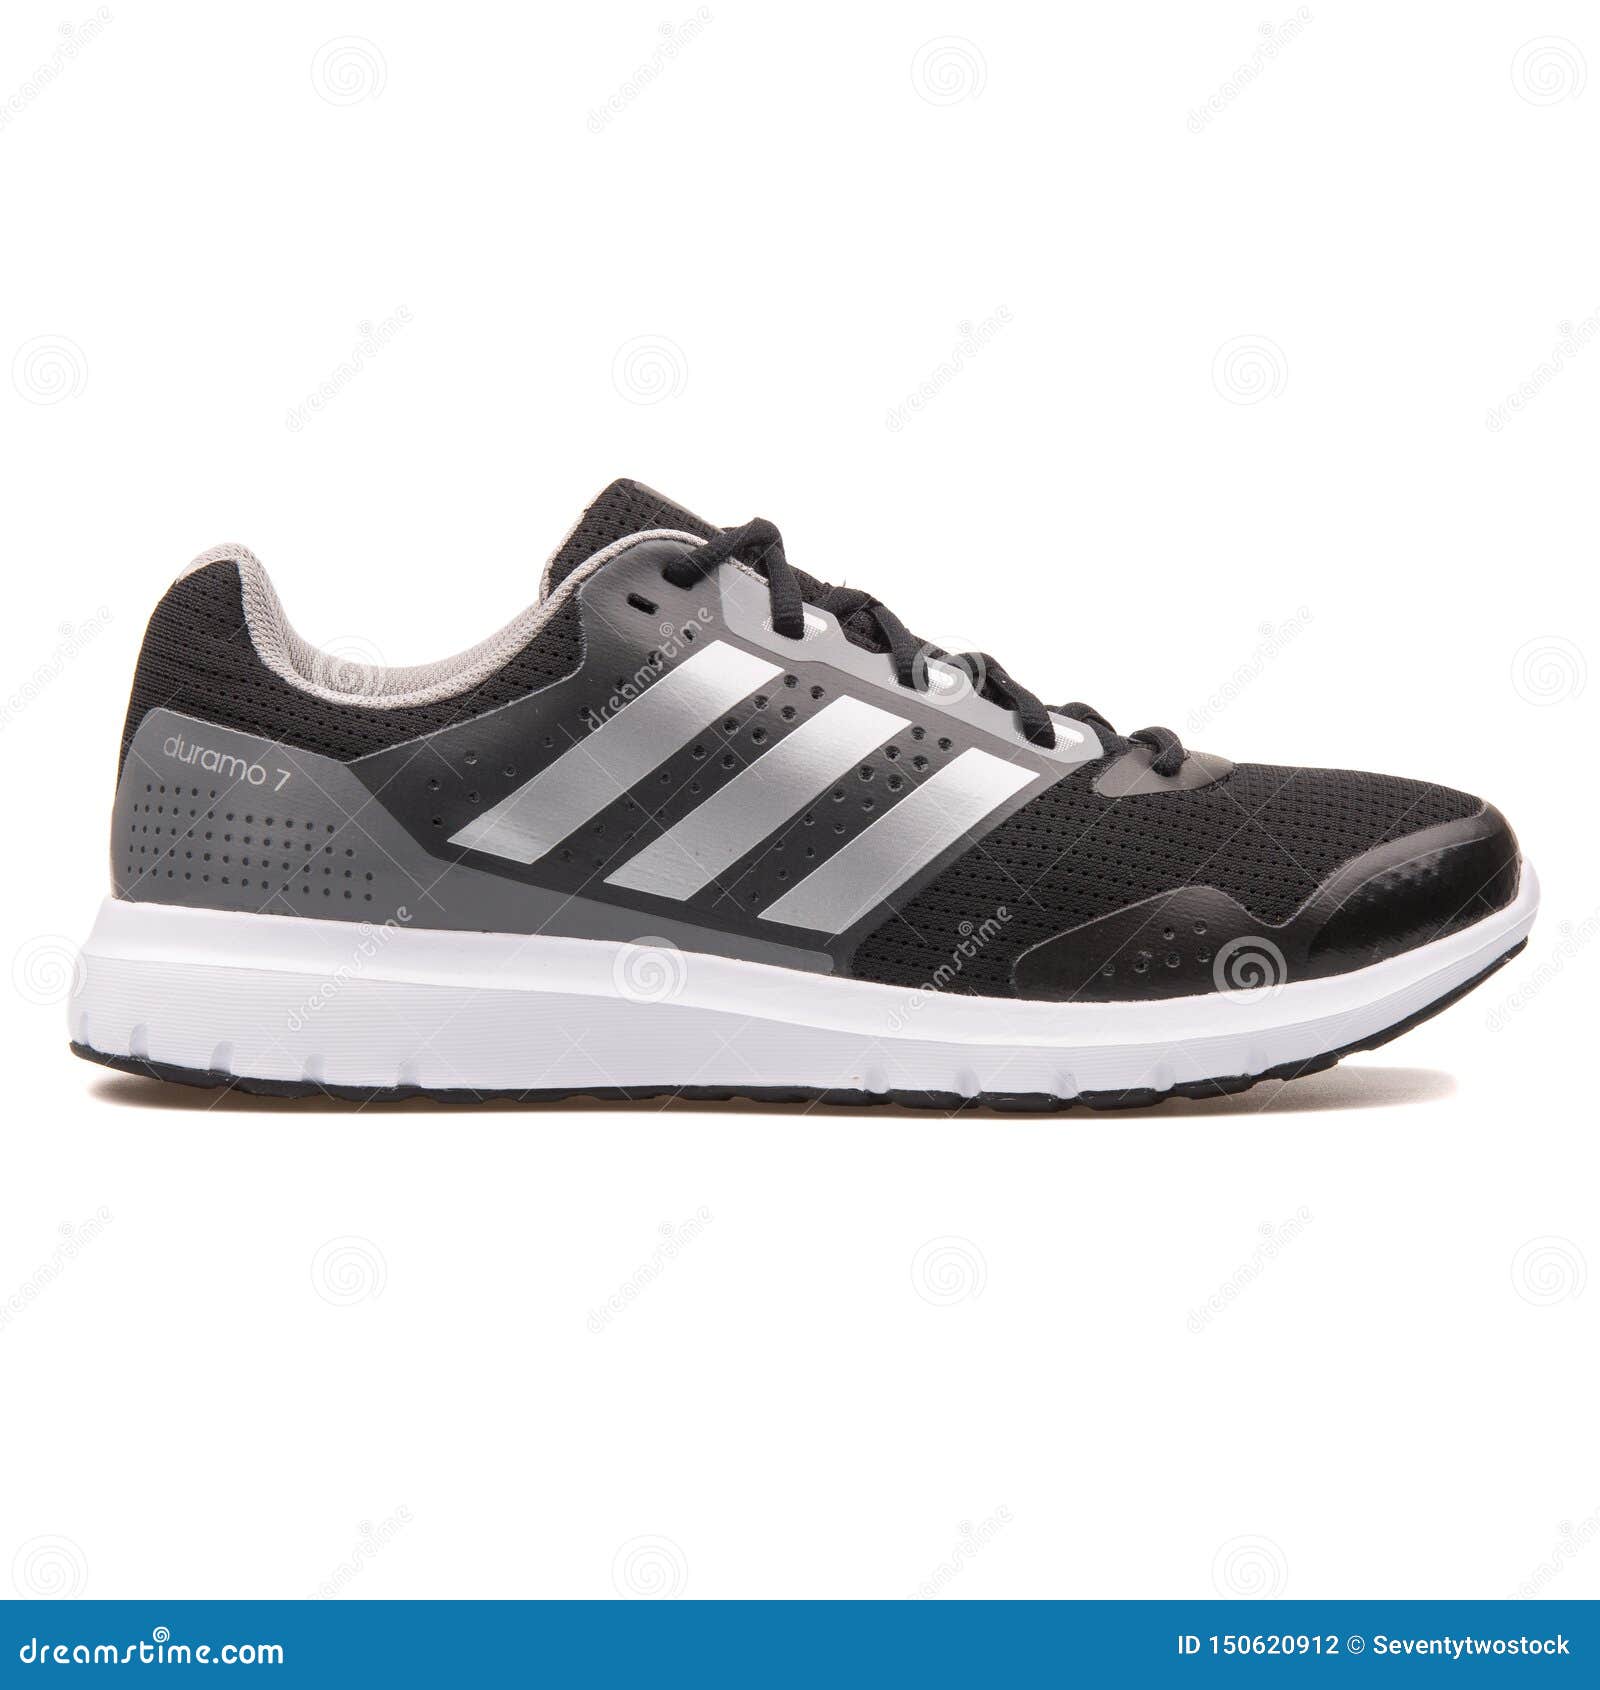 Adidas Duramo 7 Black And Grey Sneaker 